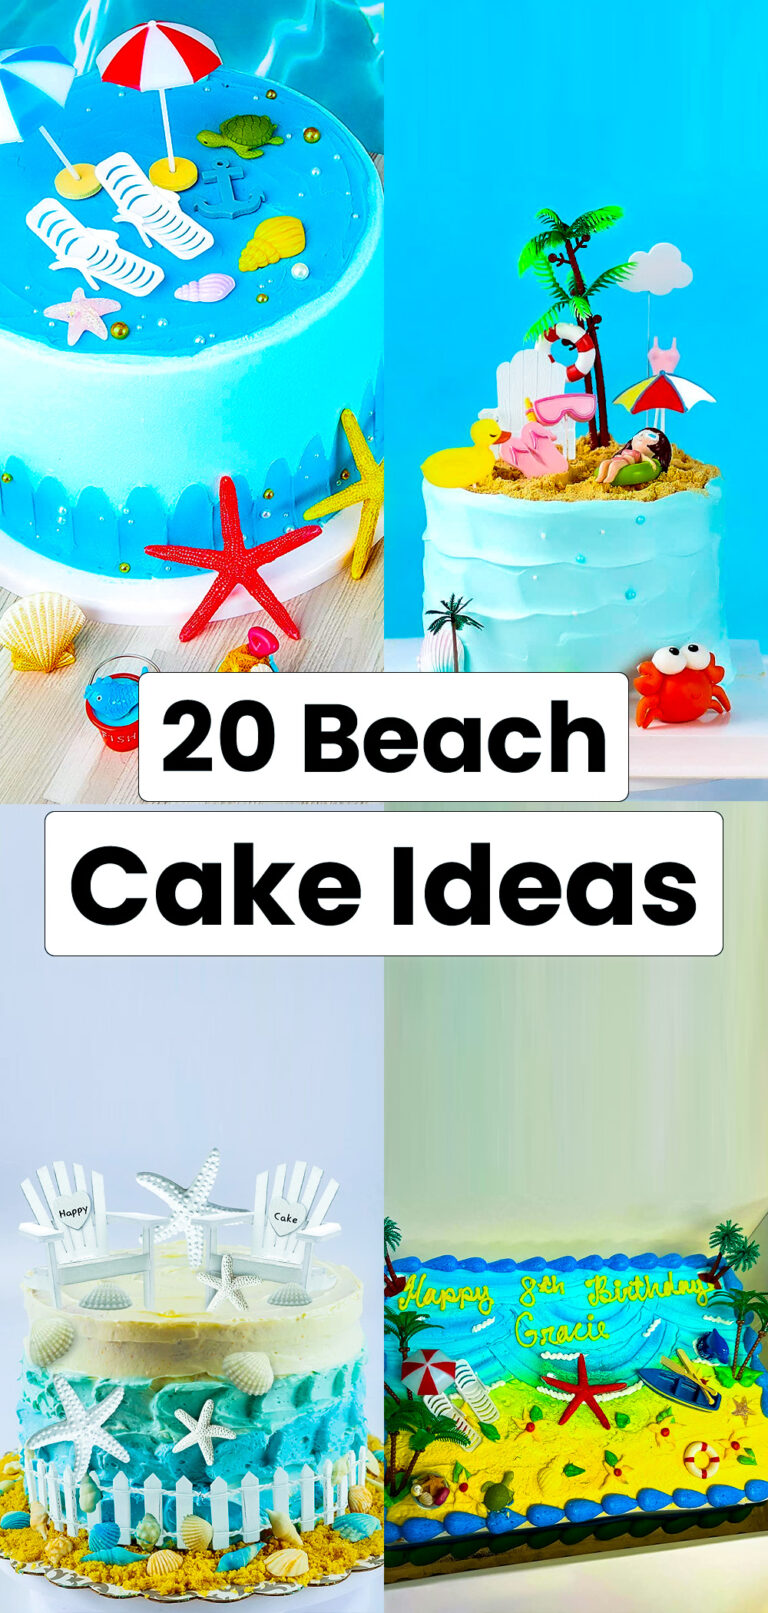 17 Beach Cake Ideas